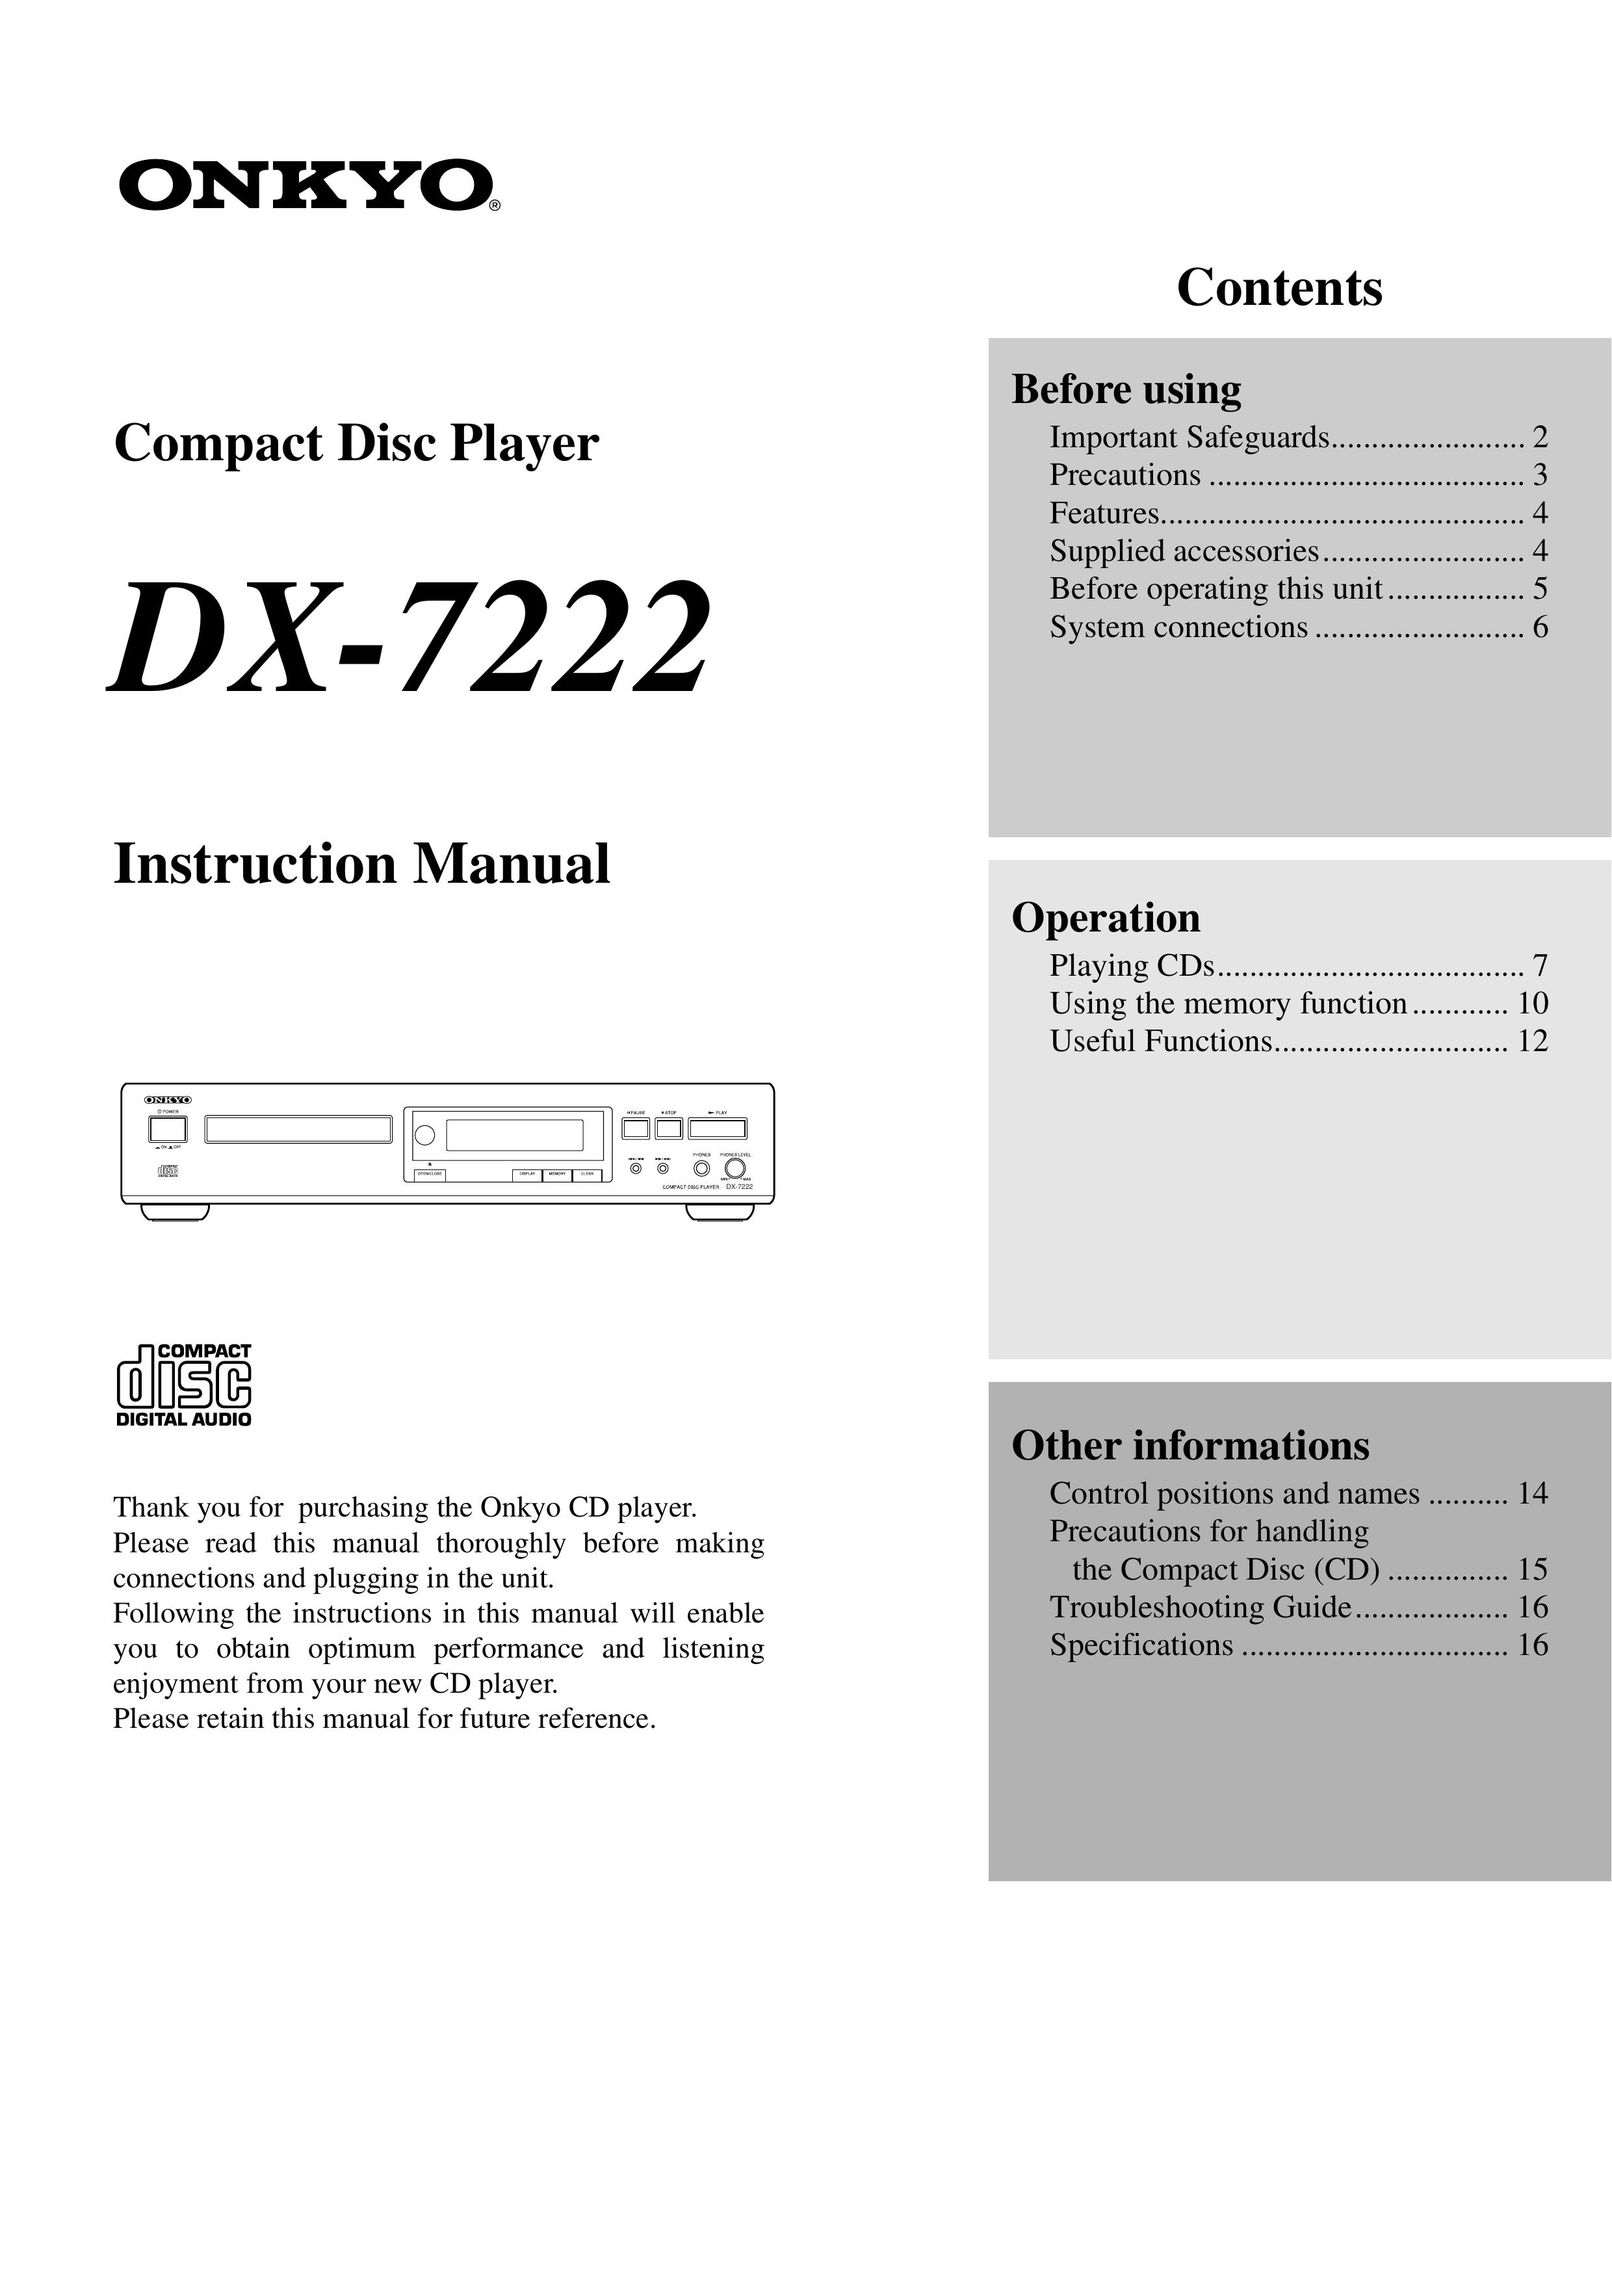 Onkyo DX-7222 CD Player User Manual